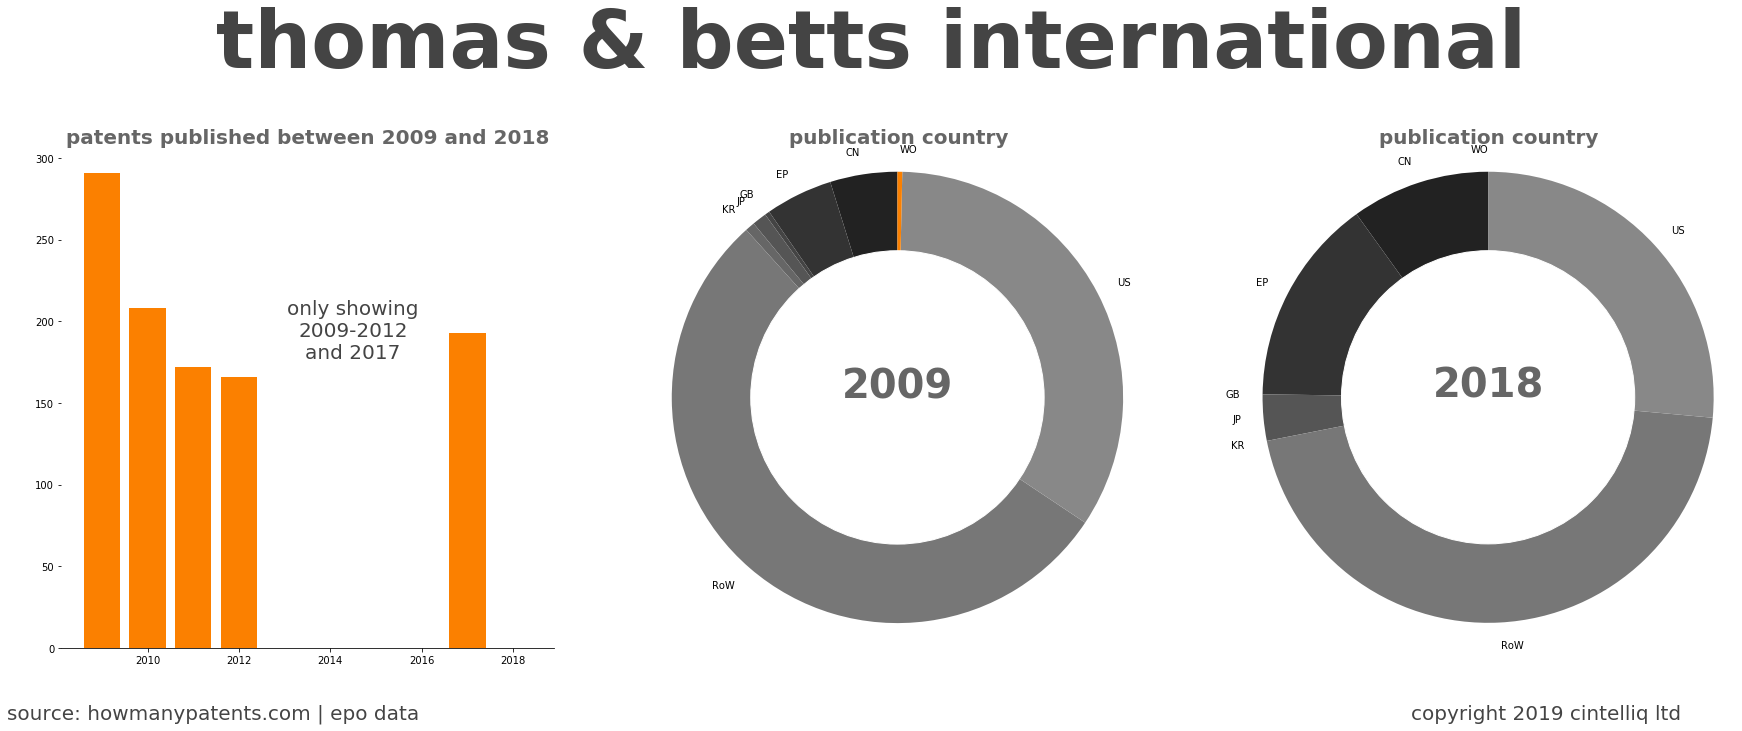 summary of patents for Thomas & Betts International